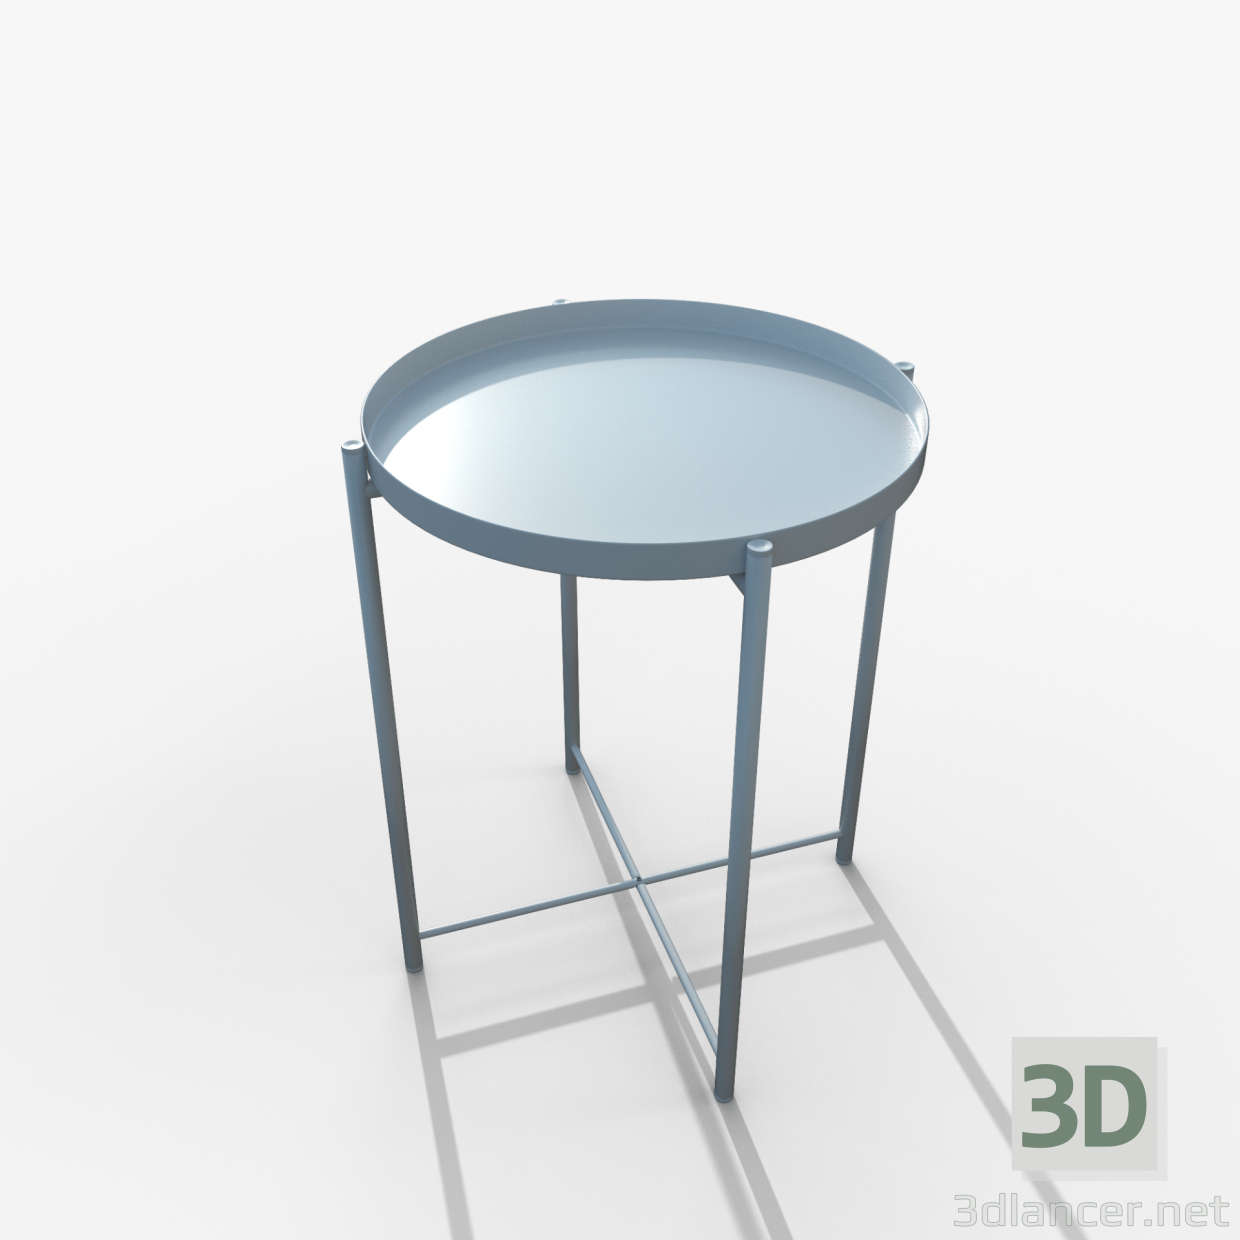 3D Gladom masa beyaz IKEA modeli satın - render